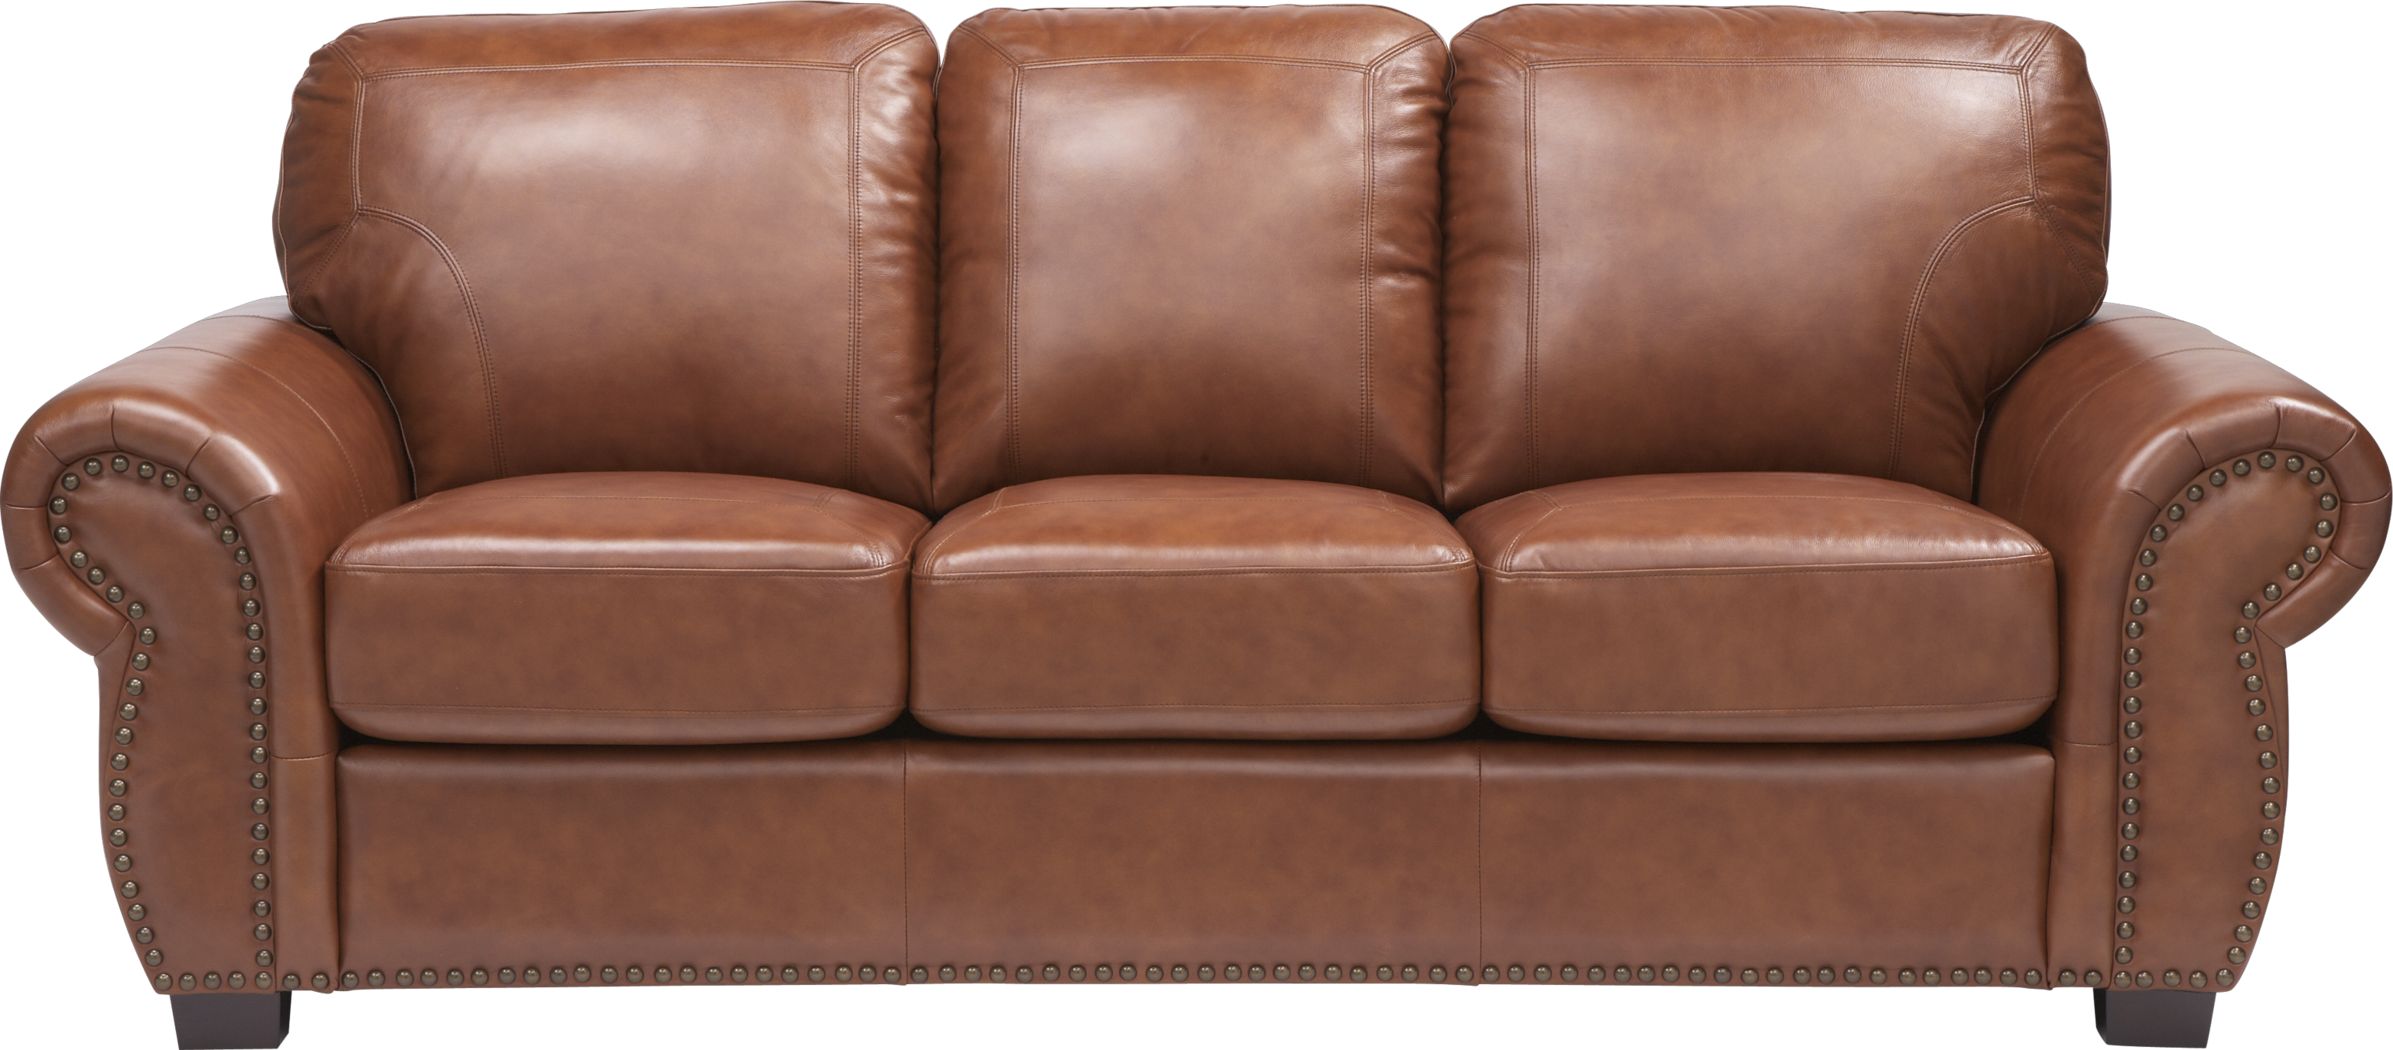 balencia light brown leather sofa